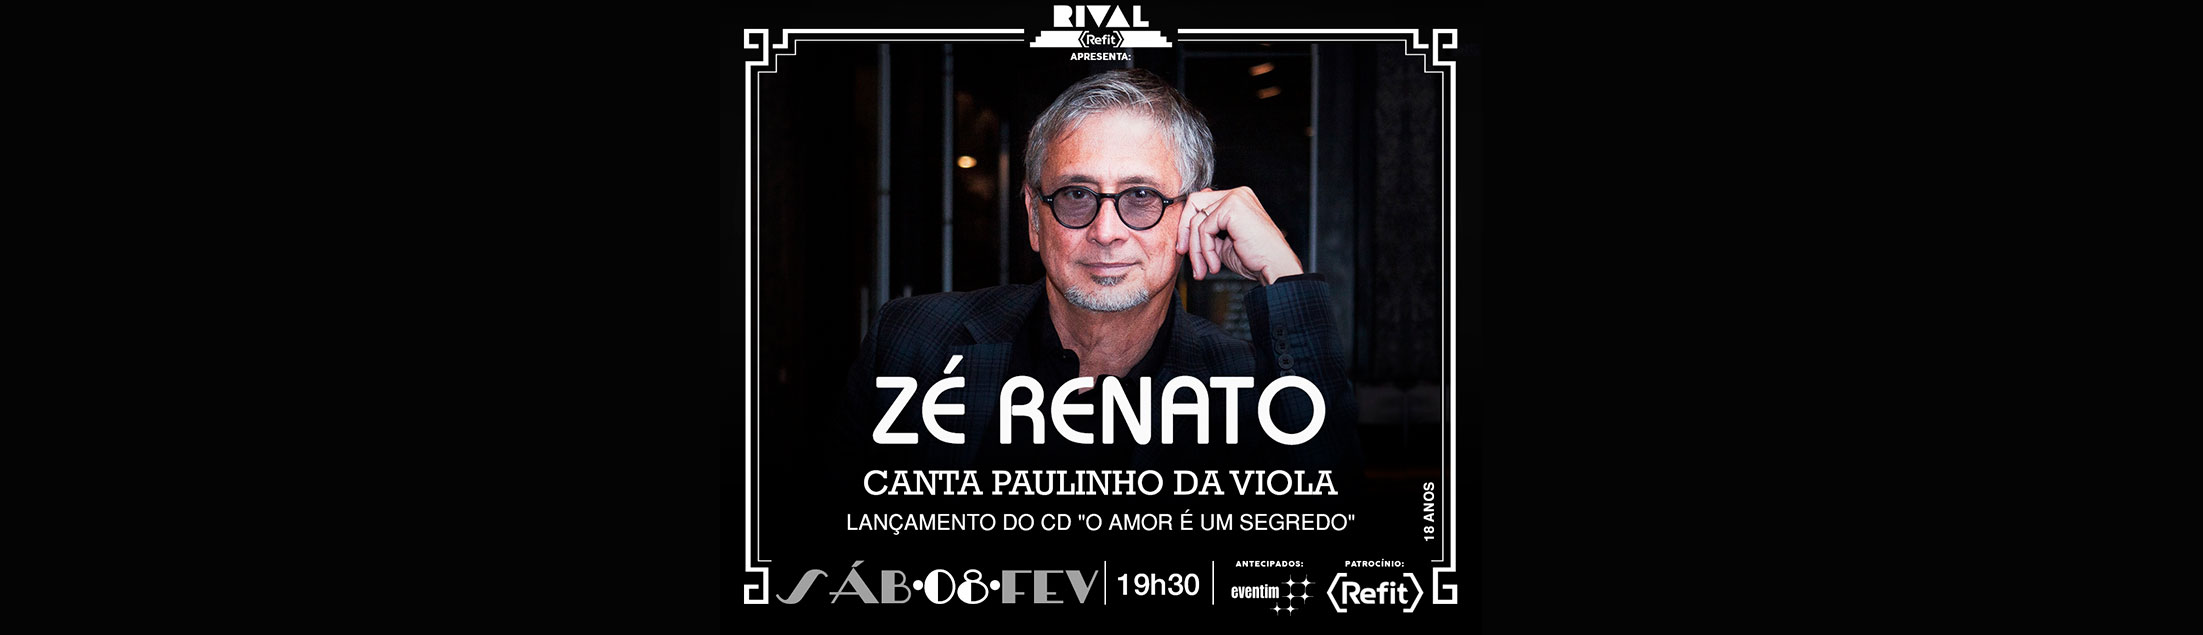 Zé Renato canta Paulinho da Viola no Teatro Rival